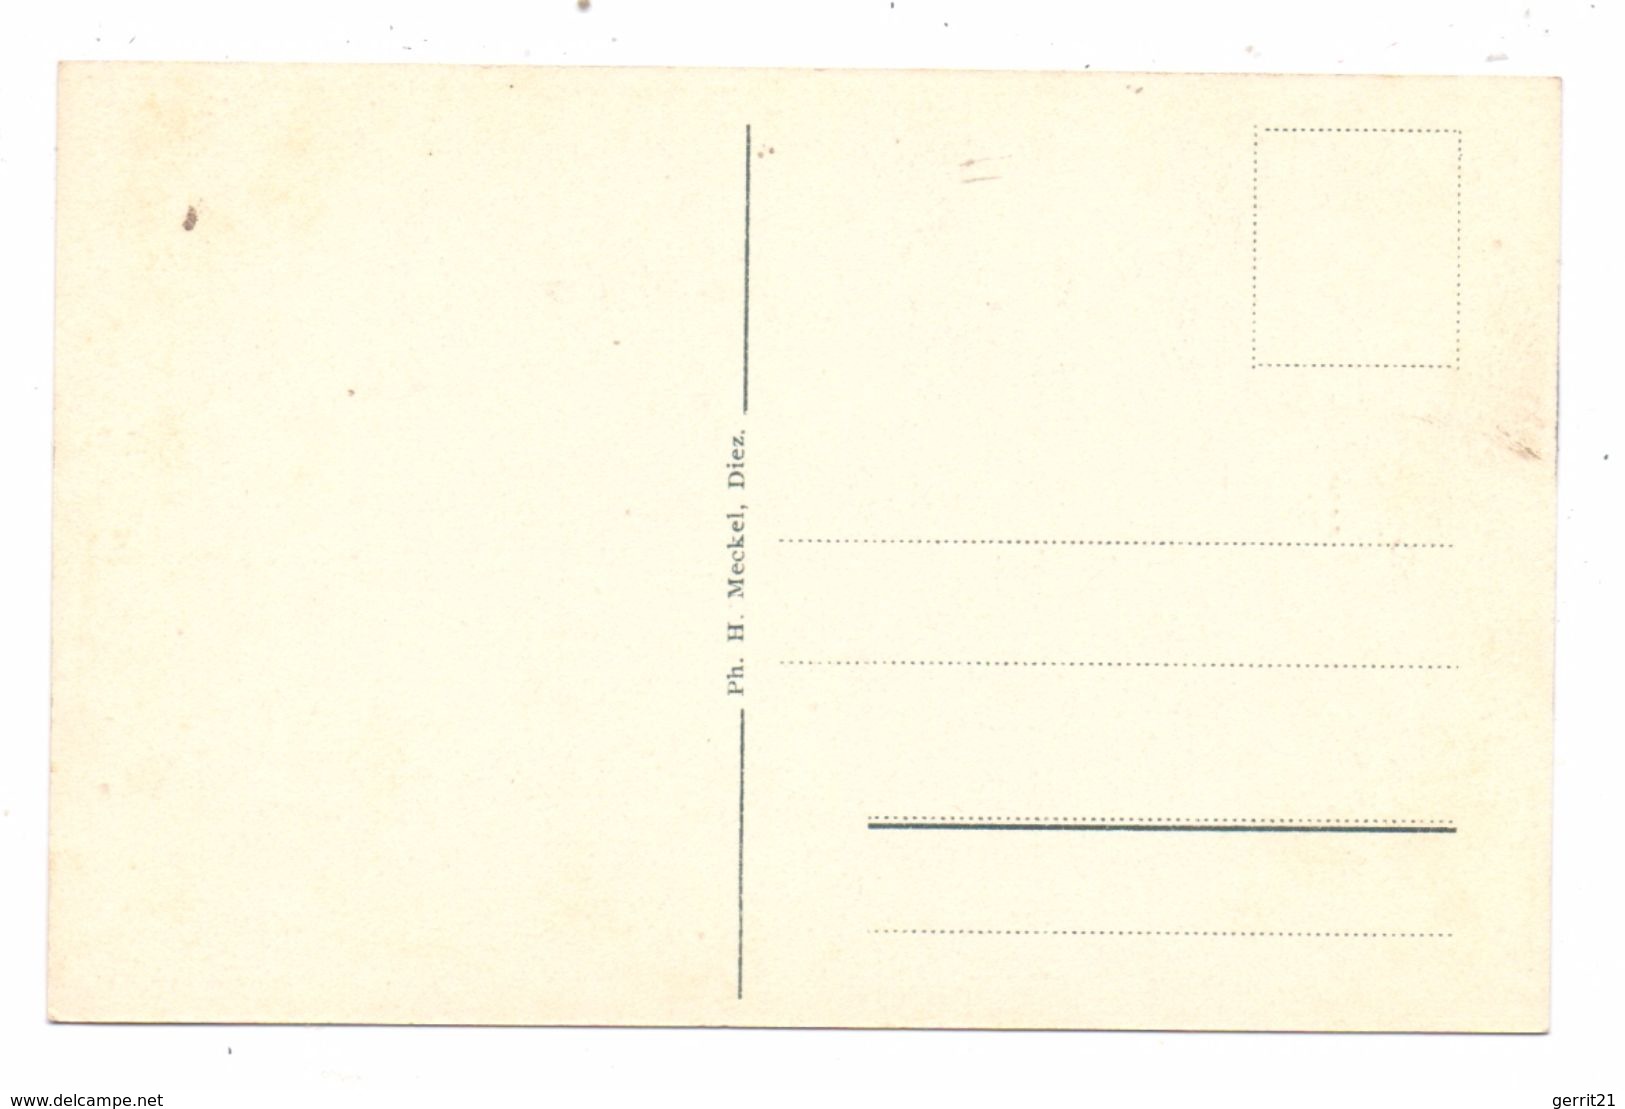 6252 DIEZ, Schlossbrunnen, Künstler-Karte, 1914 - Diez